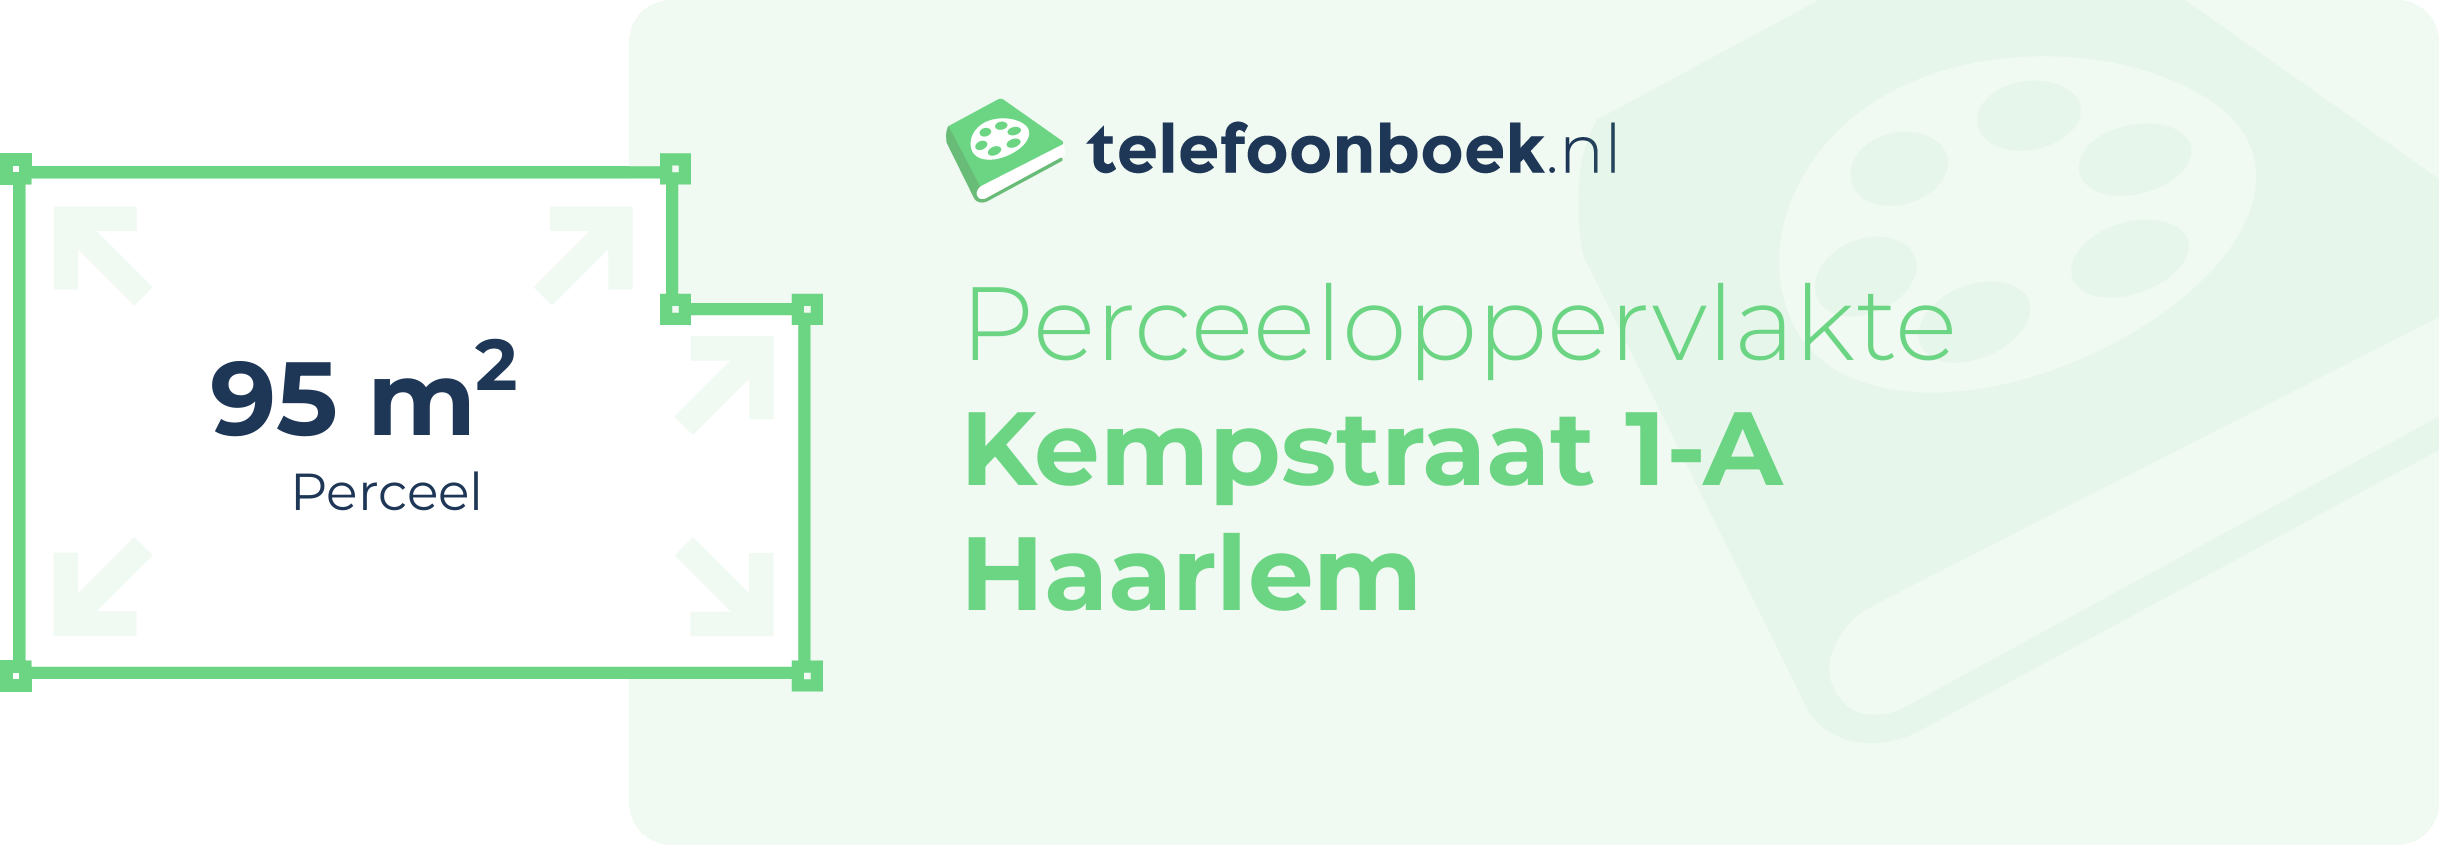 Perceeloppervlakte Kempstraat 1-A Haarlem